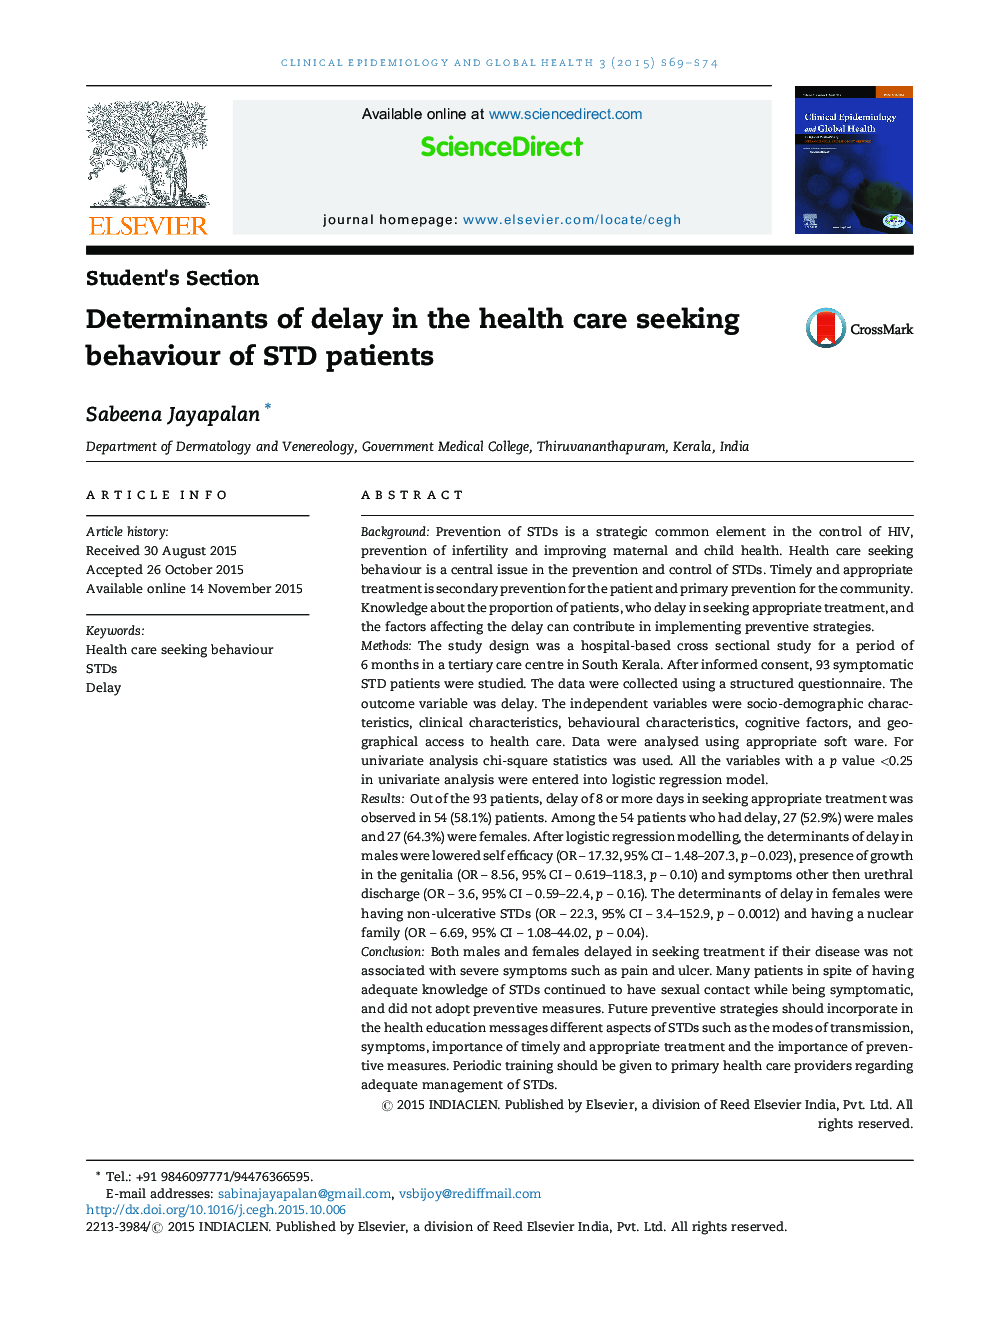 Determinants of delay in the health care seeking behaviour of STD patients